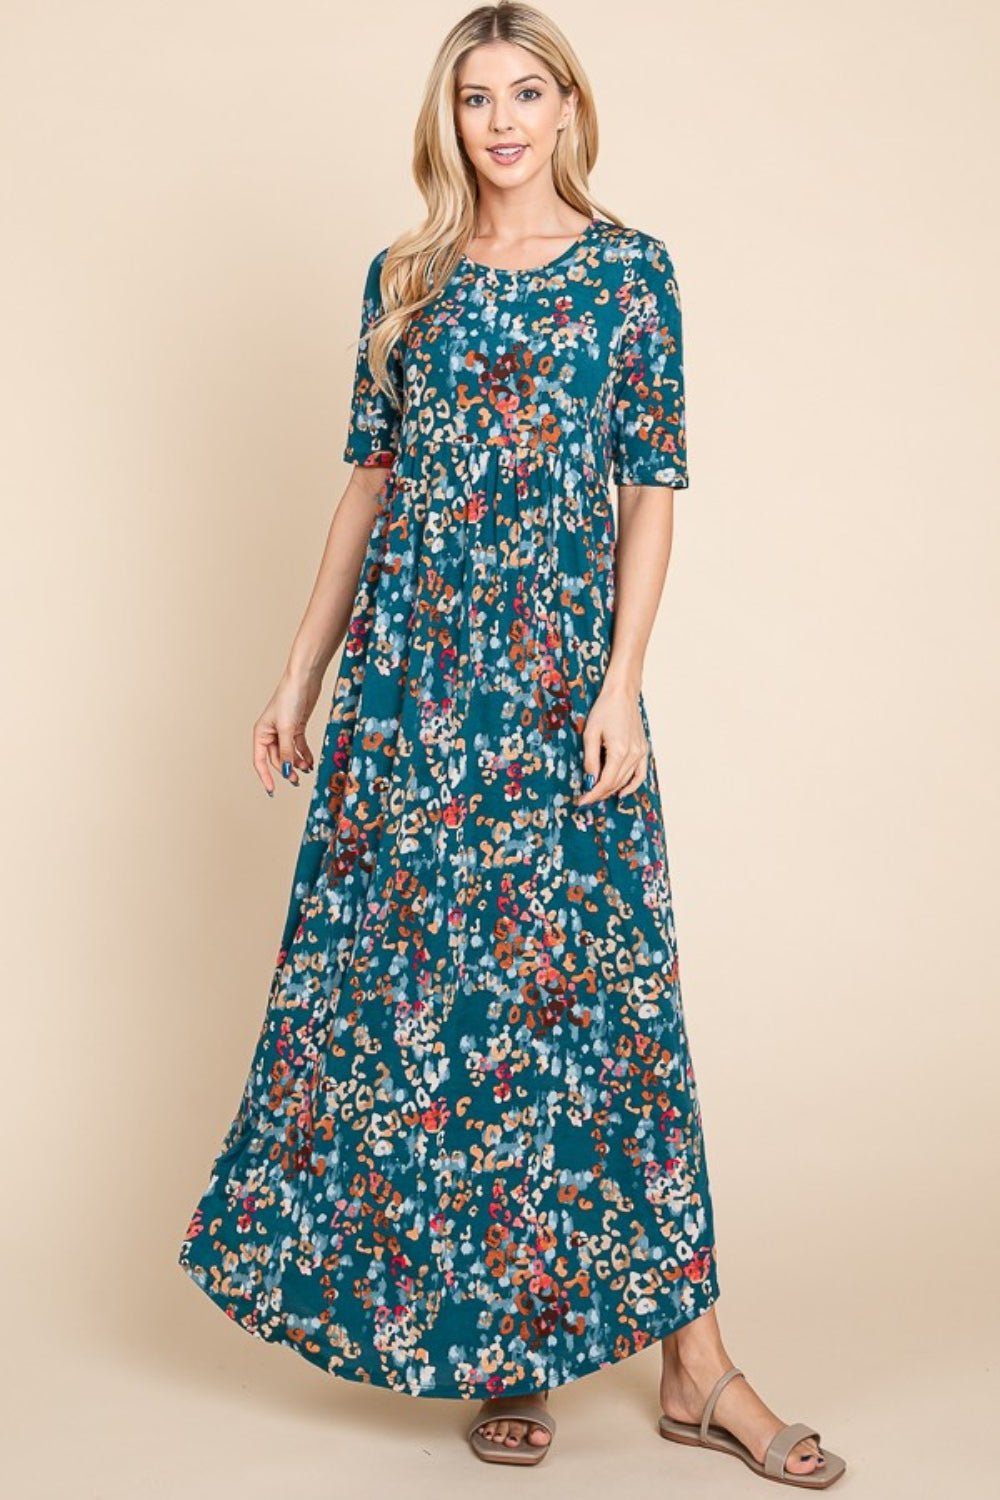 Floral Print Maxi Dress in TealMaxi DressBOMBOM